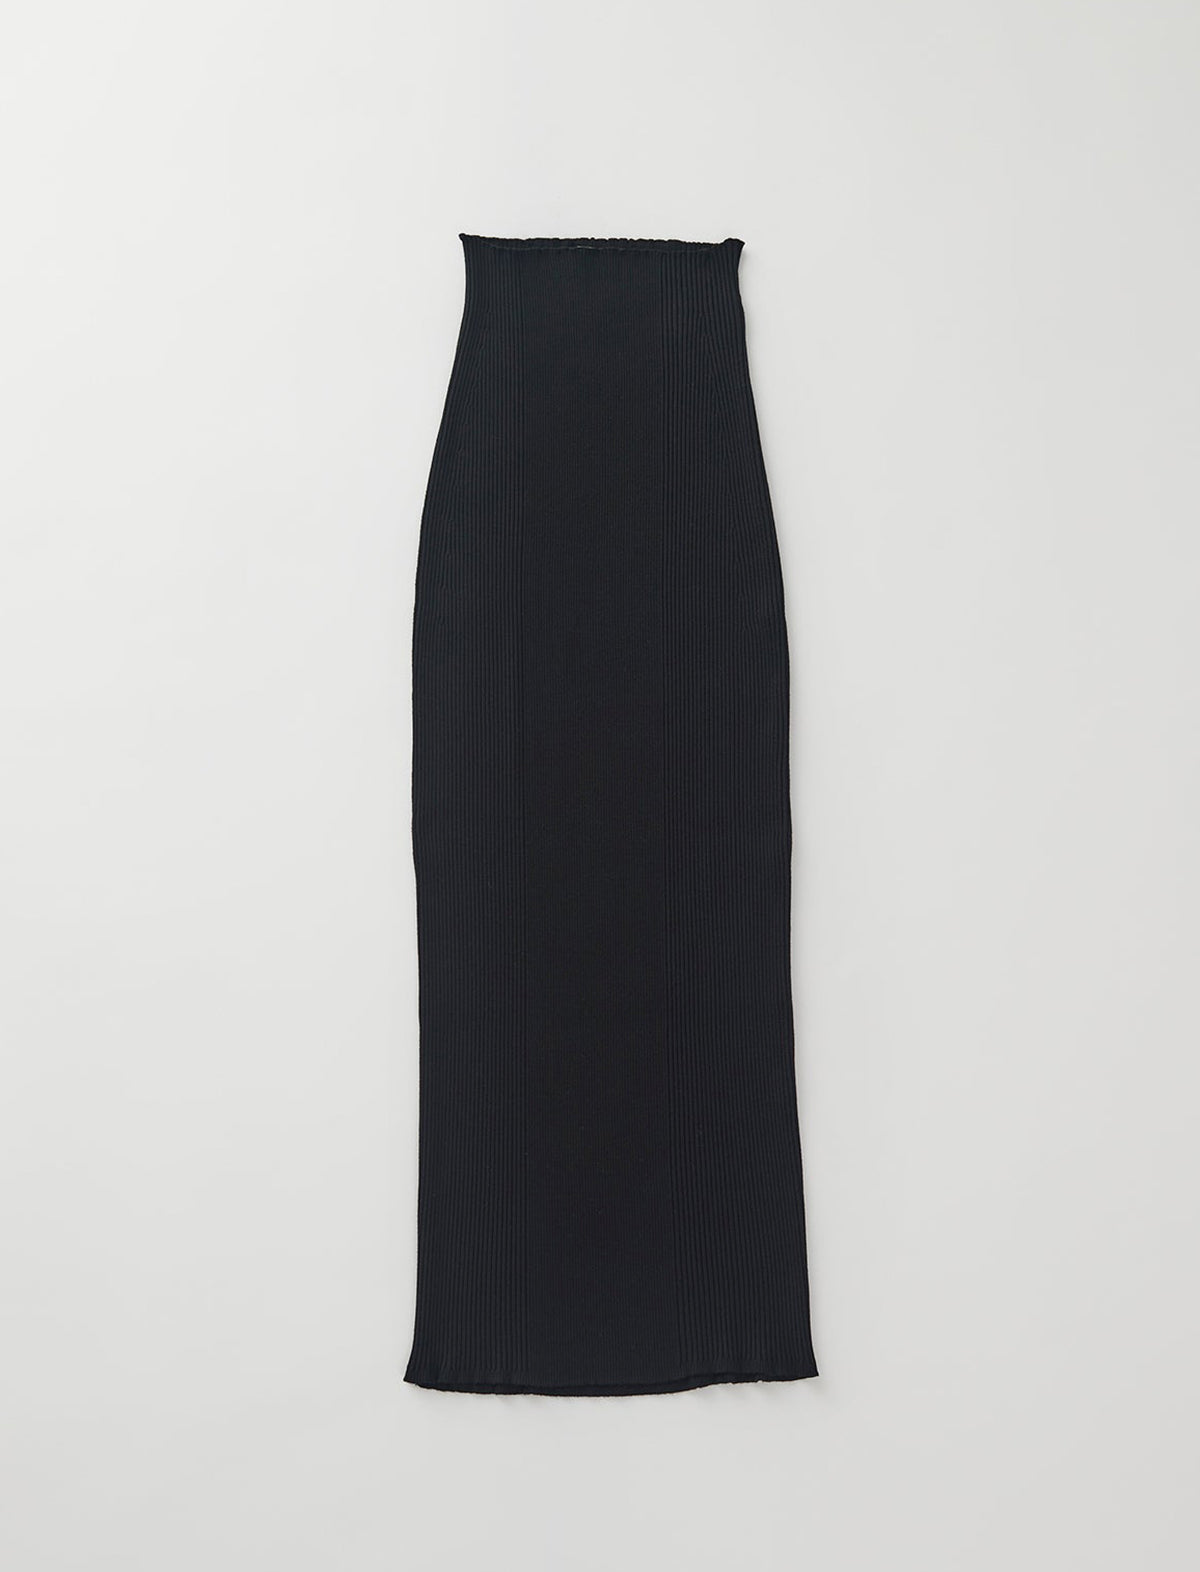 AERON ZERO004 Long Skirt in Black